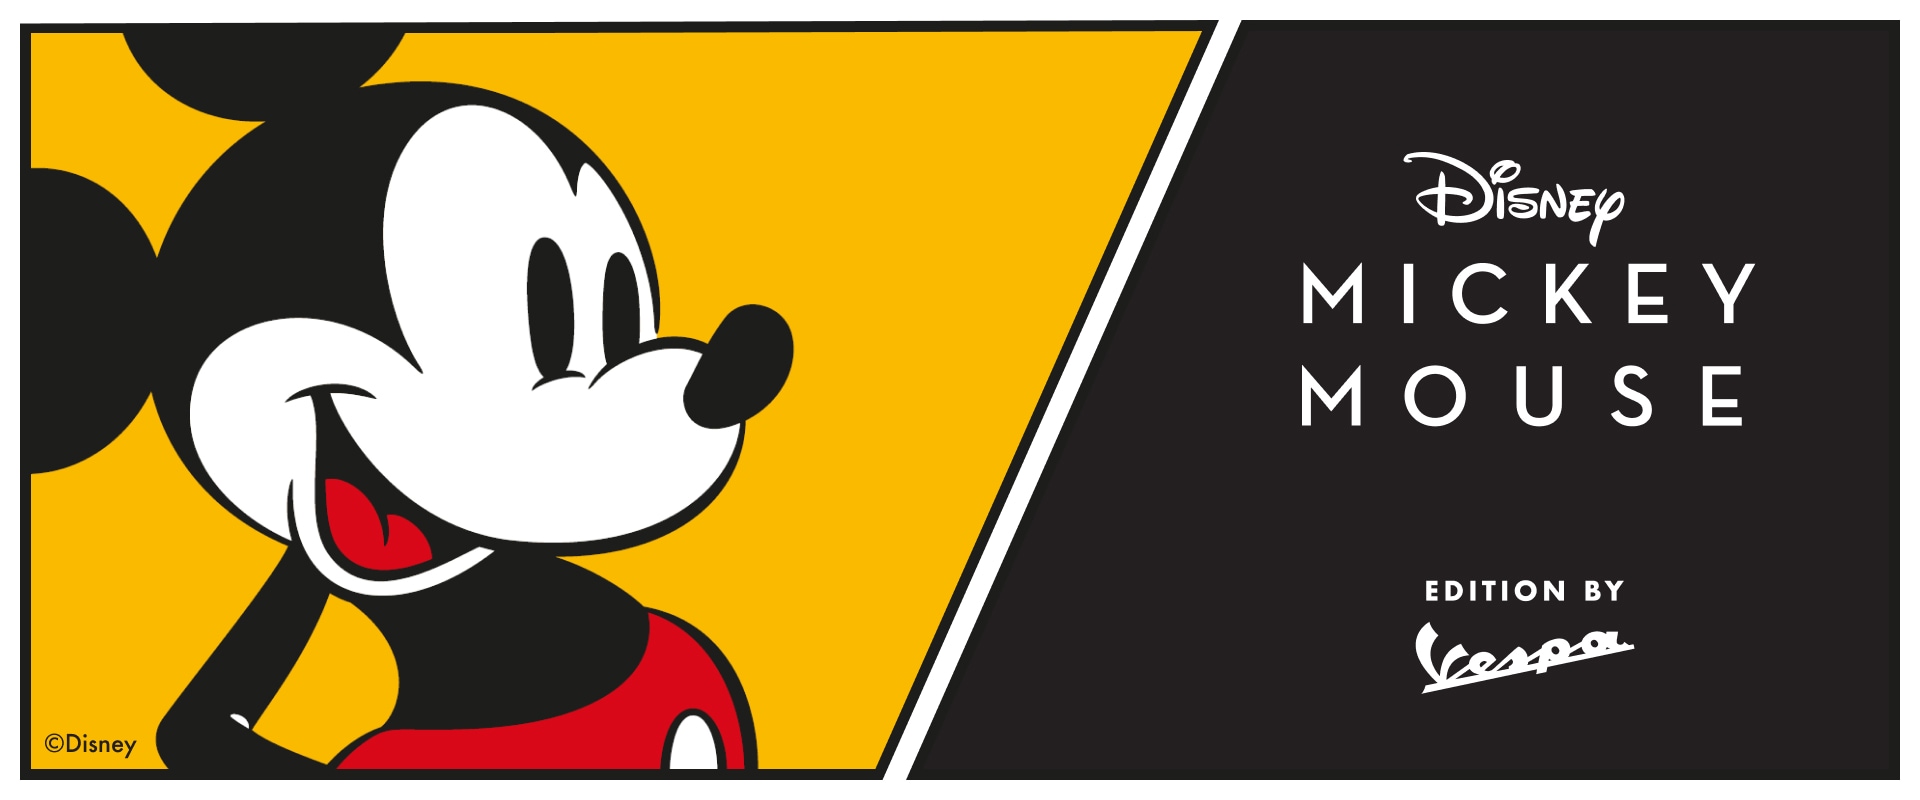 Disney Mickey Mouse and Vespa